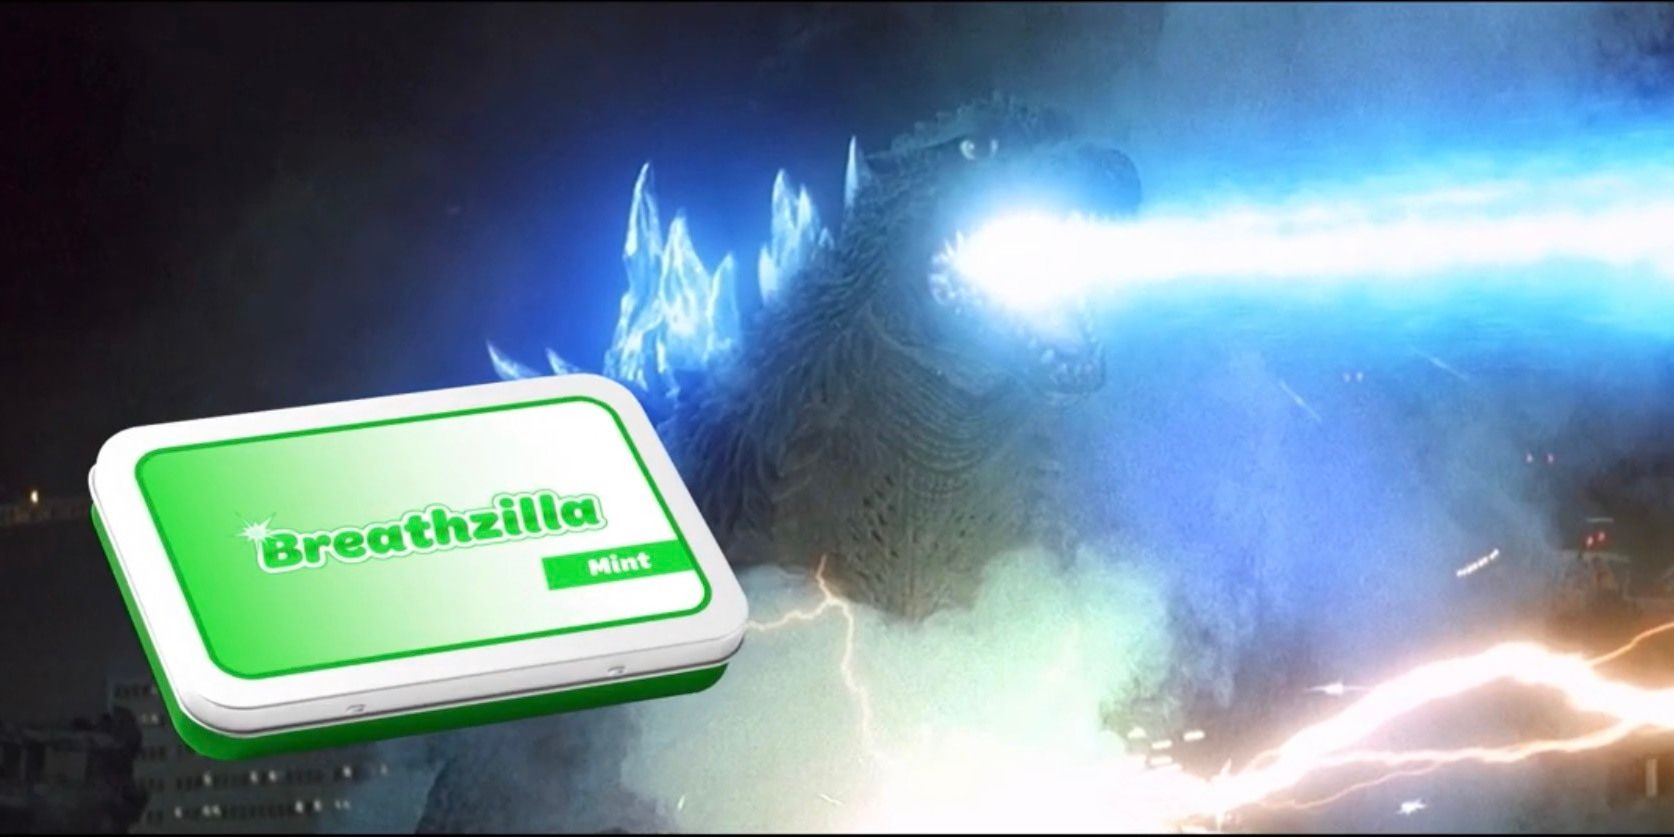 Godzilla With Breathzilla Mints